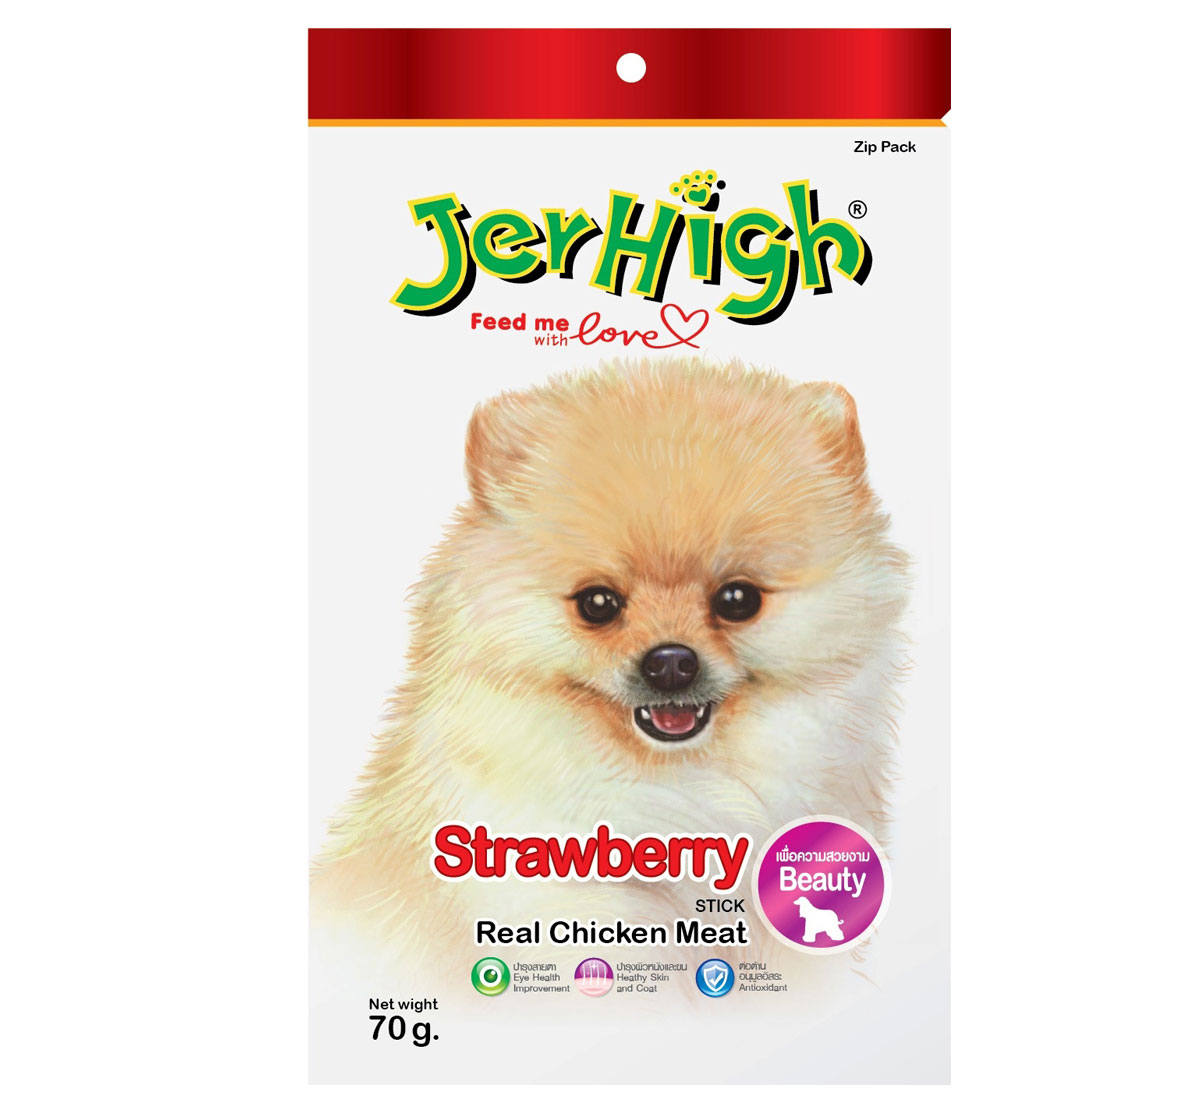 JerHigh Strawberry Stick Premium Dog Treats 70g x 12 Packs